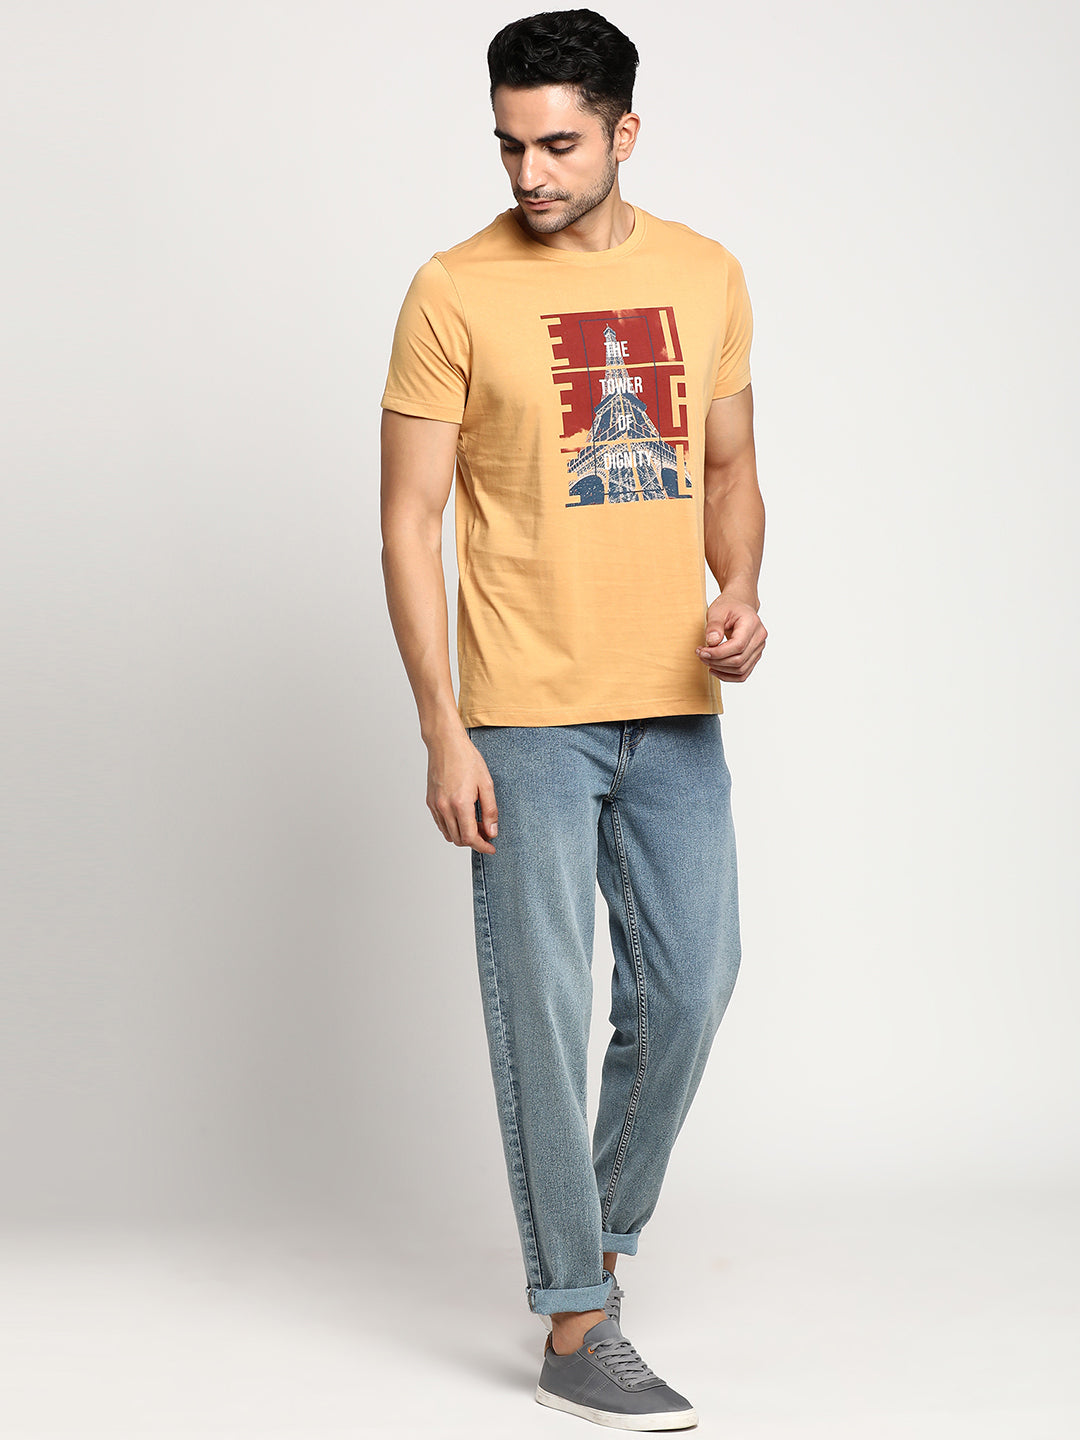 Essentials Khaki Chest Printed Round Neck T-Shirt